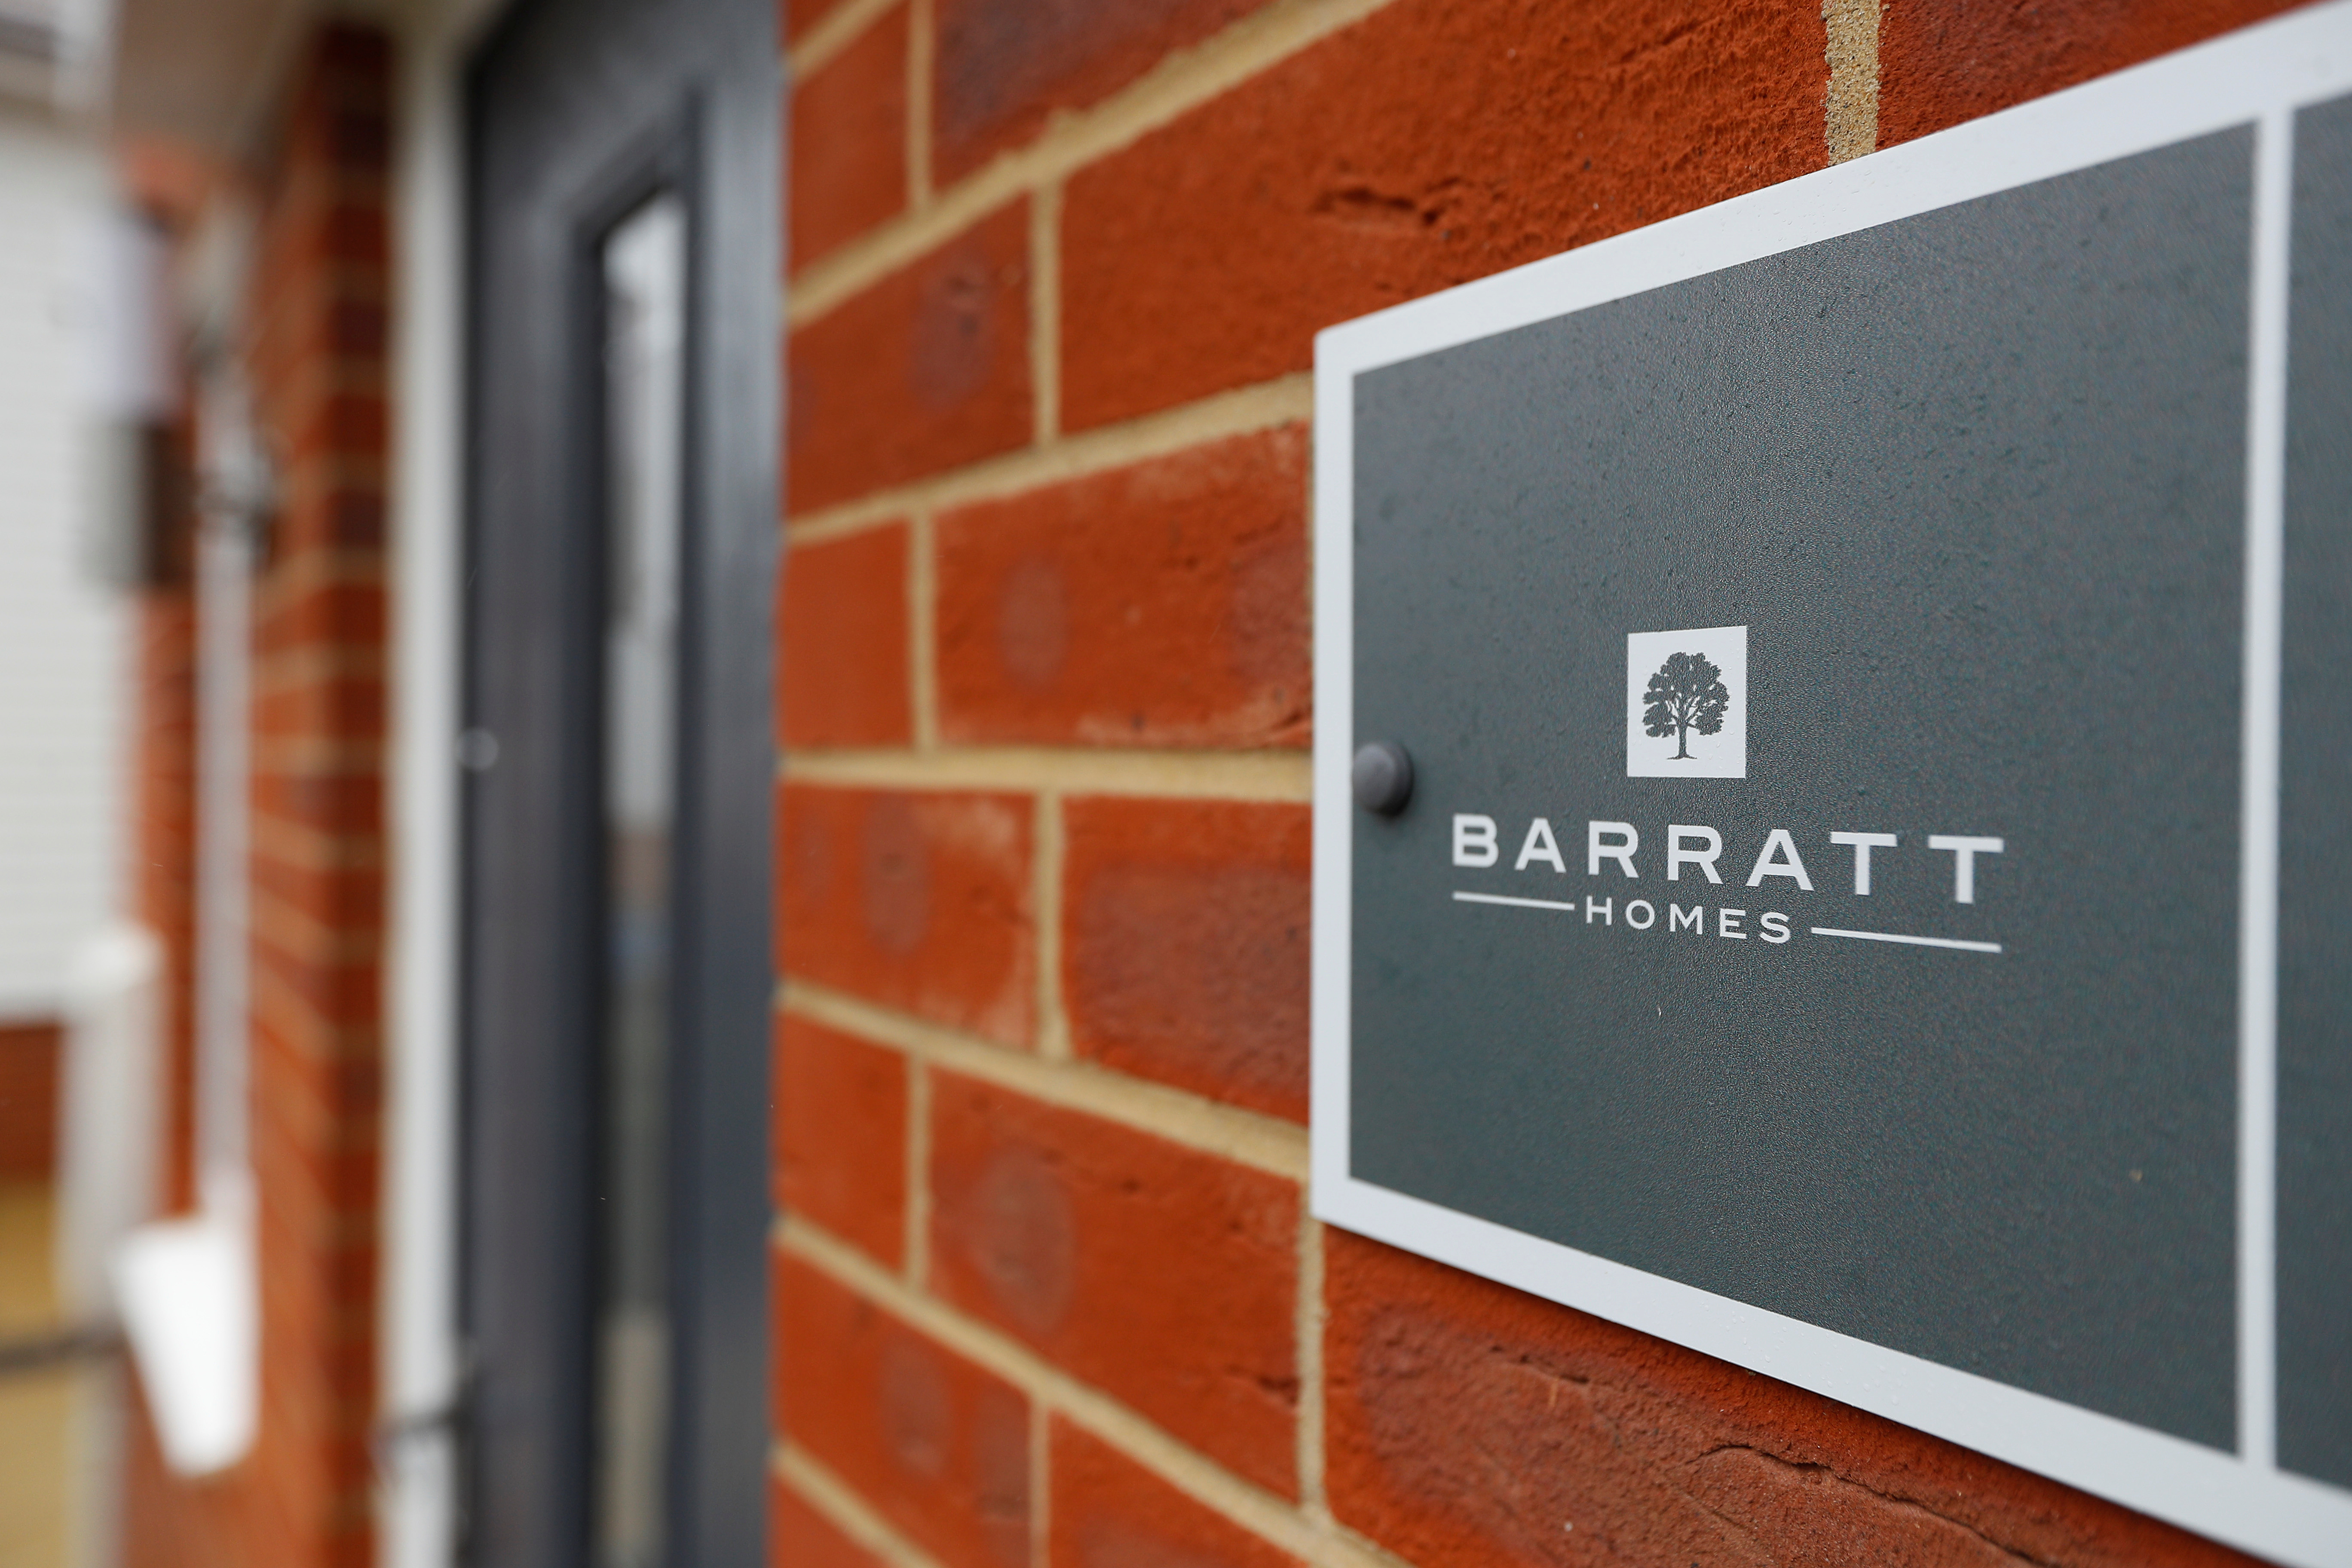 A Barratt homes sign is seen at a Barratt housing development near Haywards Heath, Britain, February 20, 2020. REUTERS/Peter Nicholls/File Photo